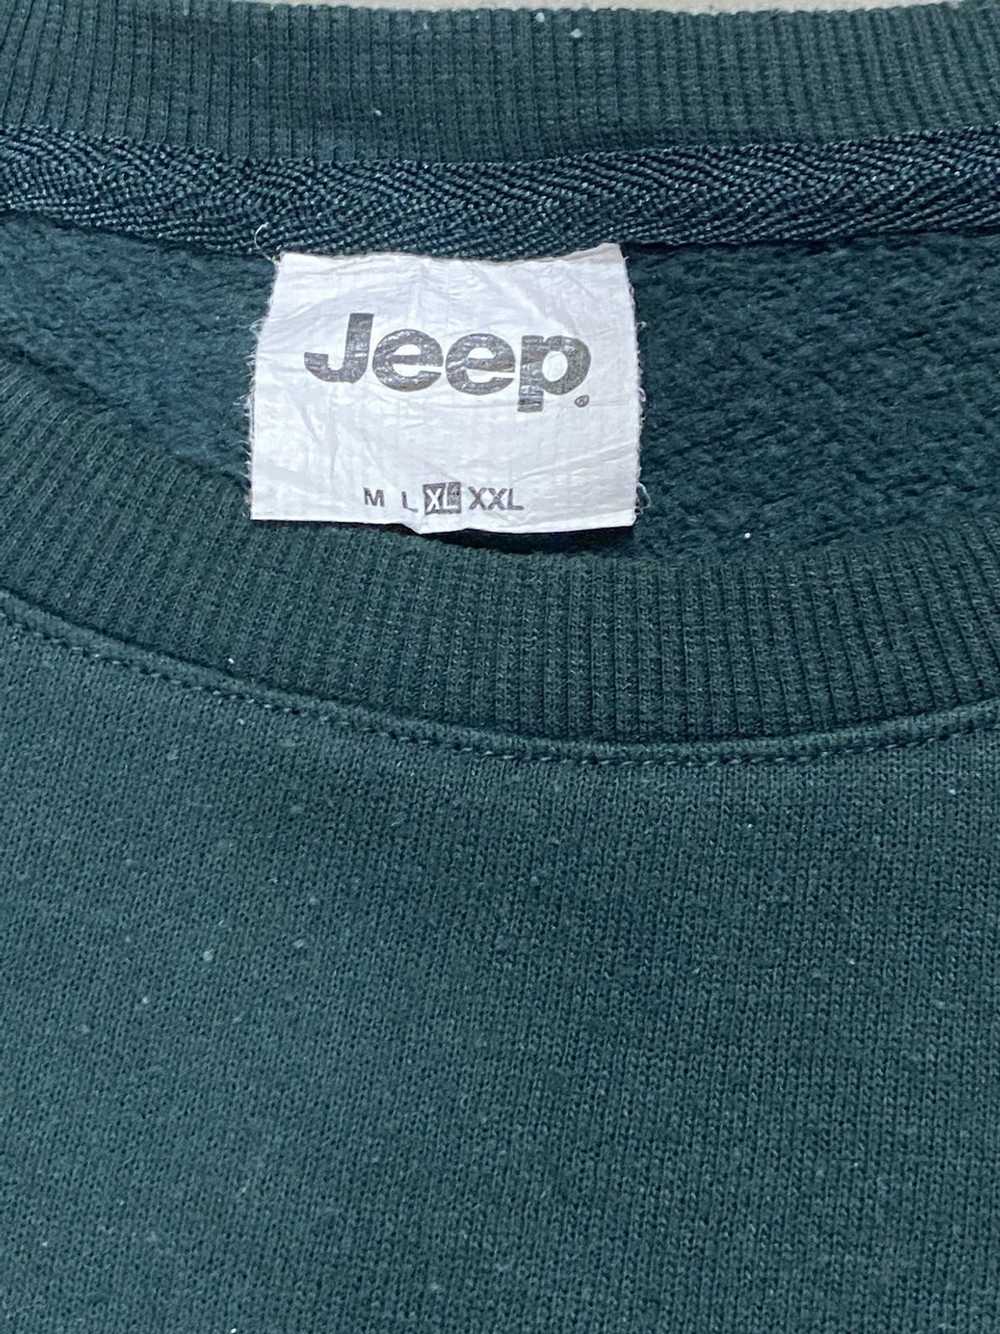 Jeep Jeep Sweatshirt big logo - image 6